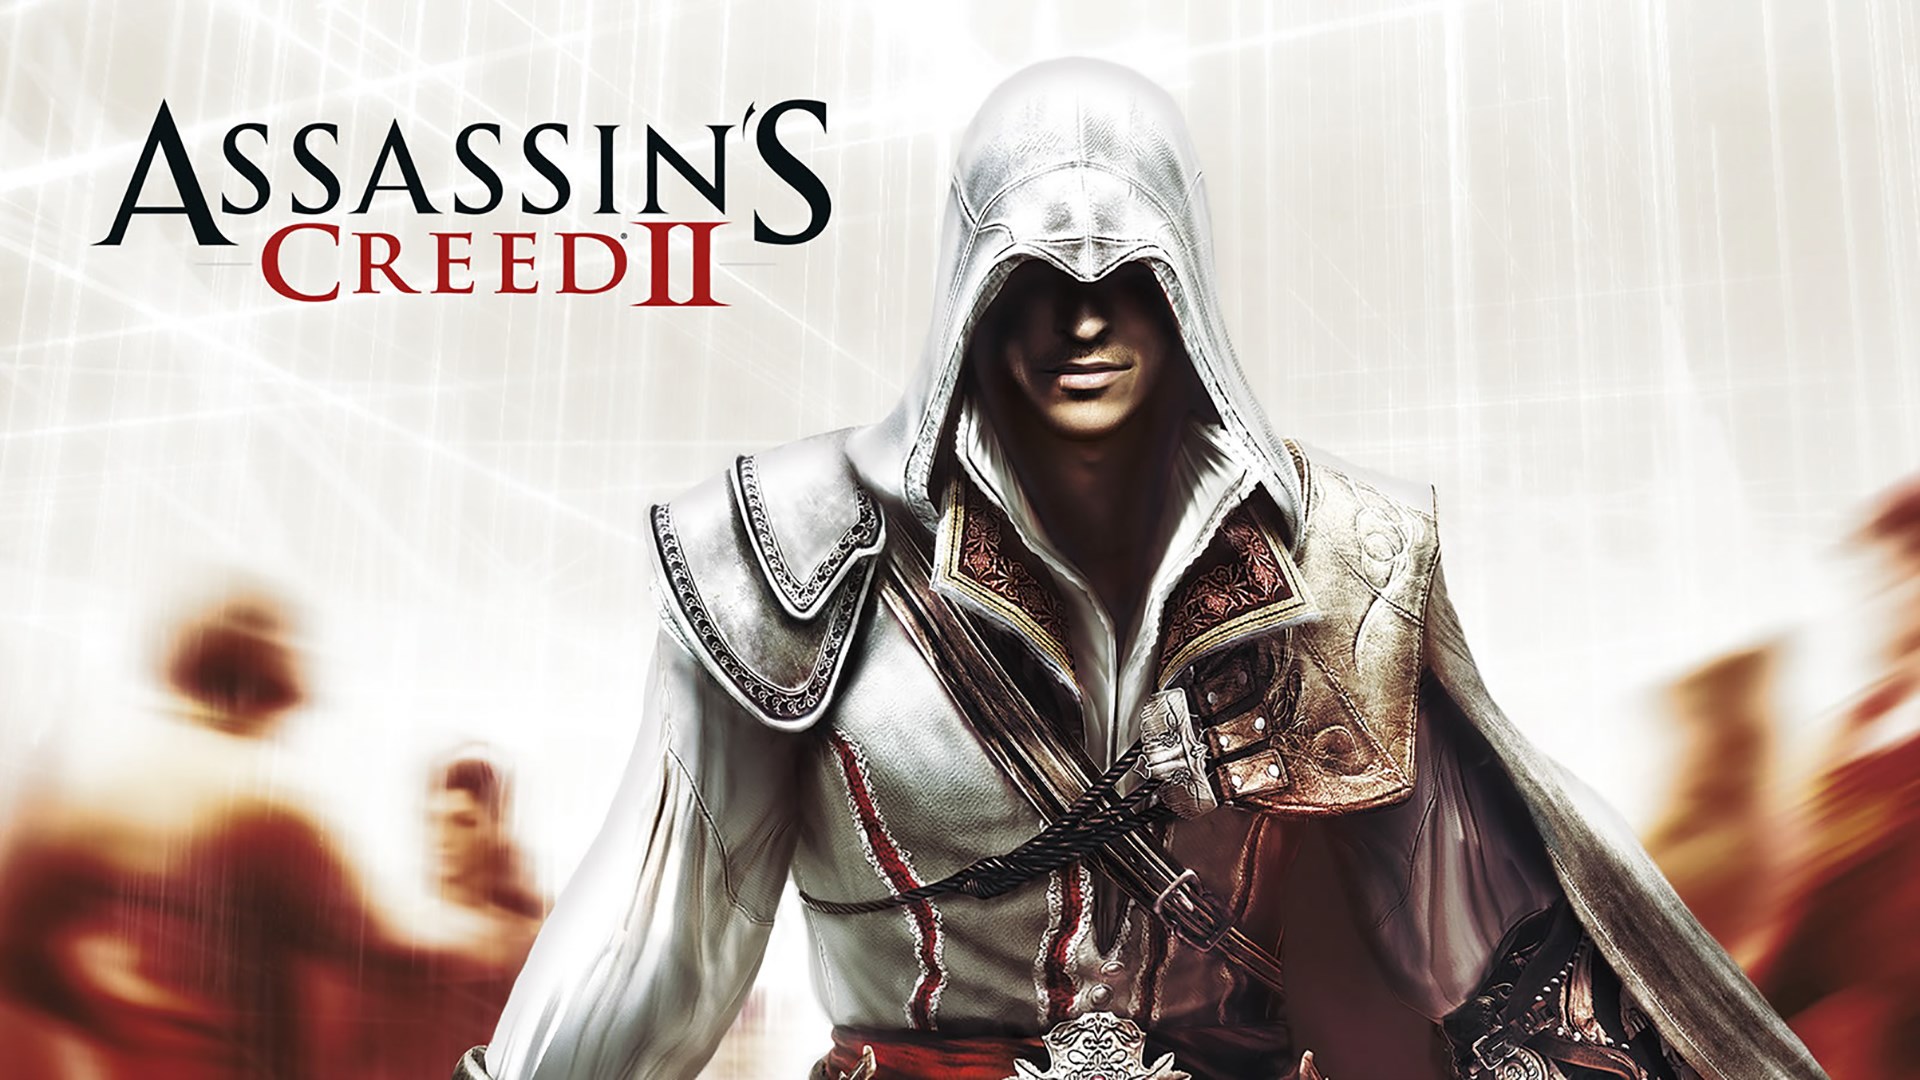 Assassin's Creed 2 ücretsiz oldu!